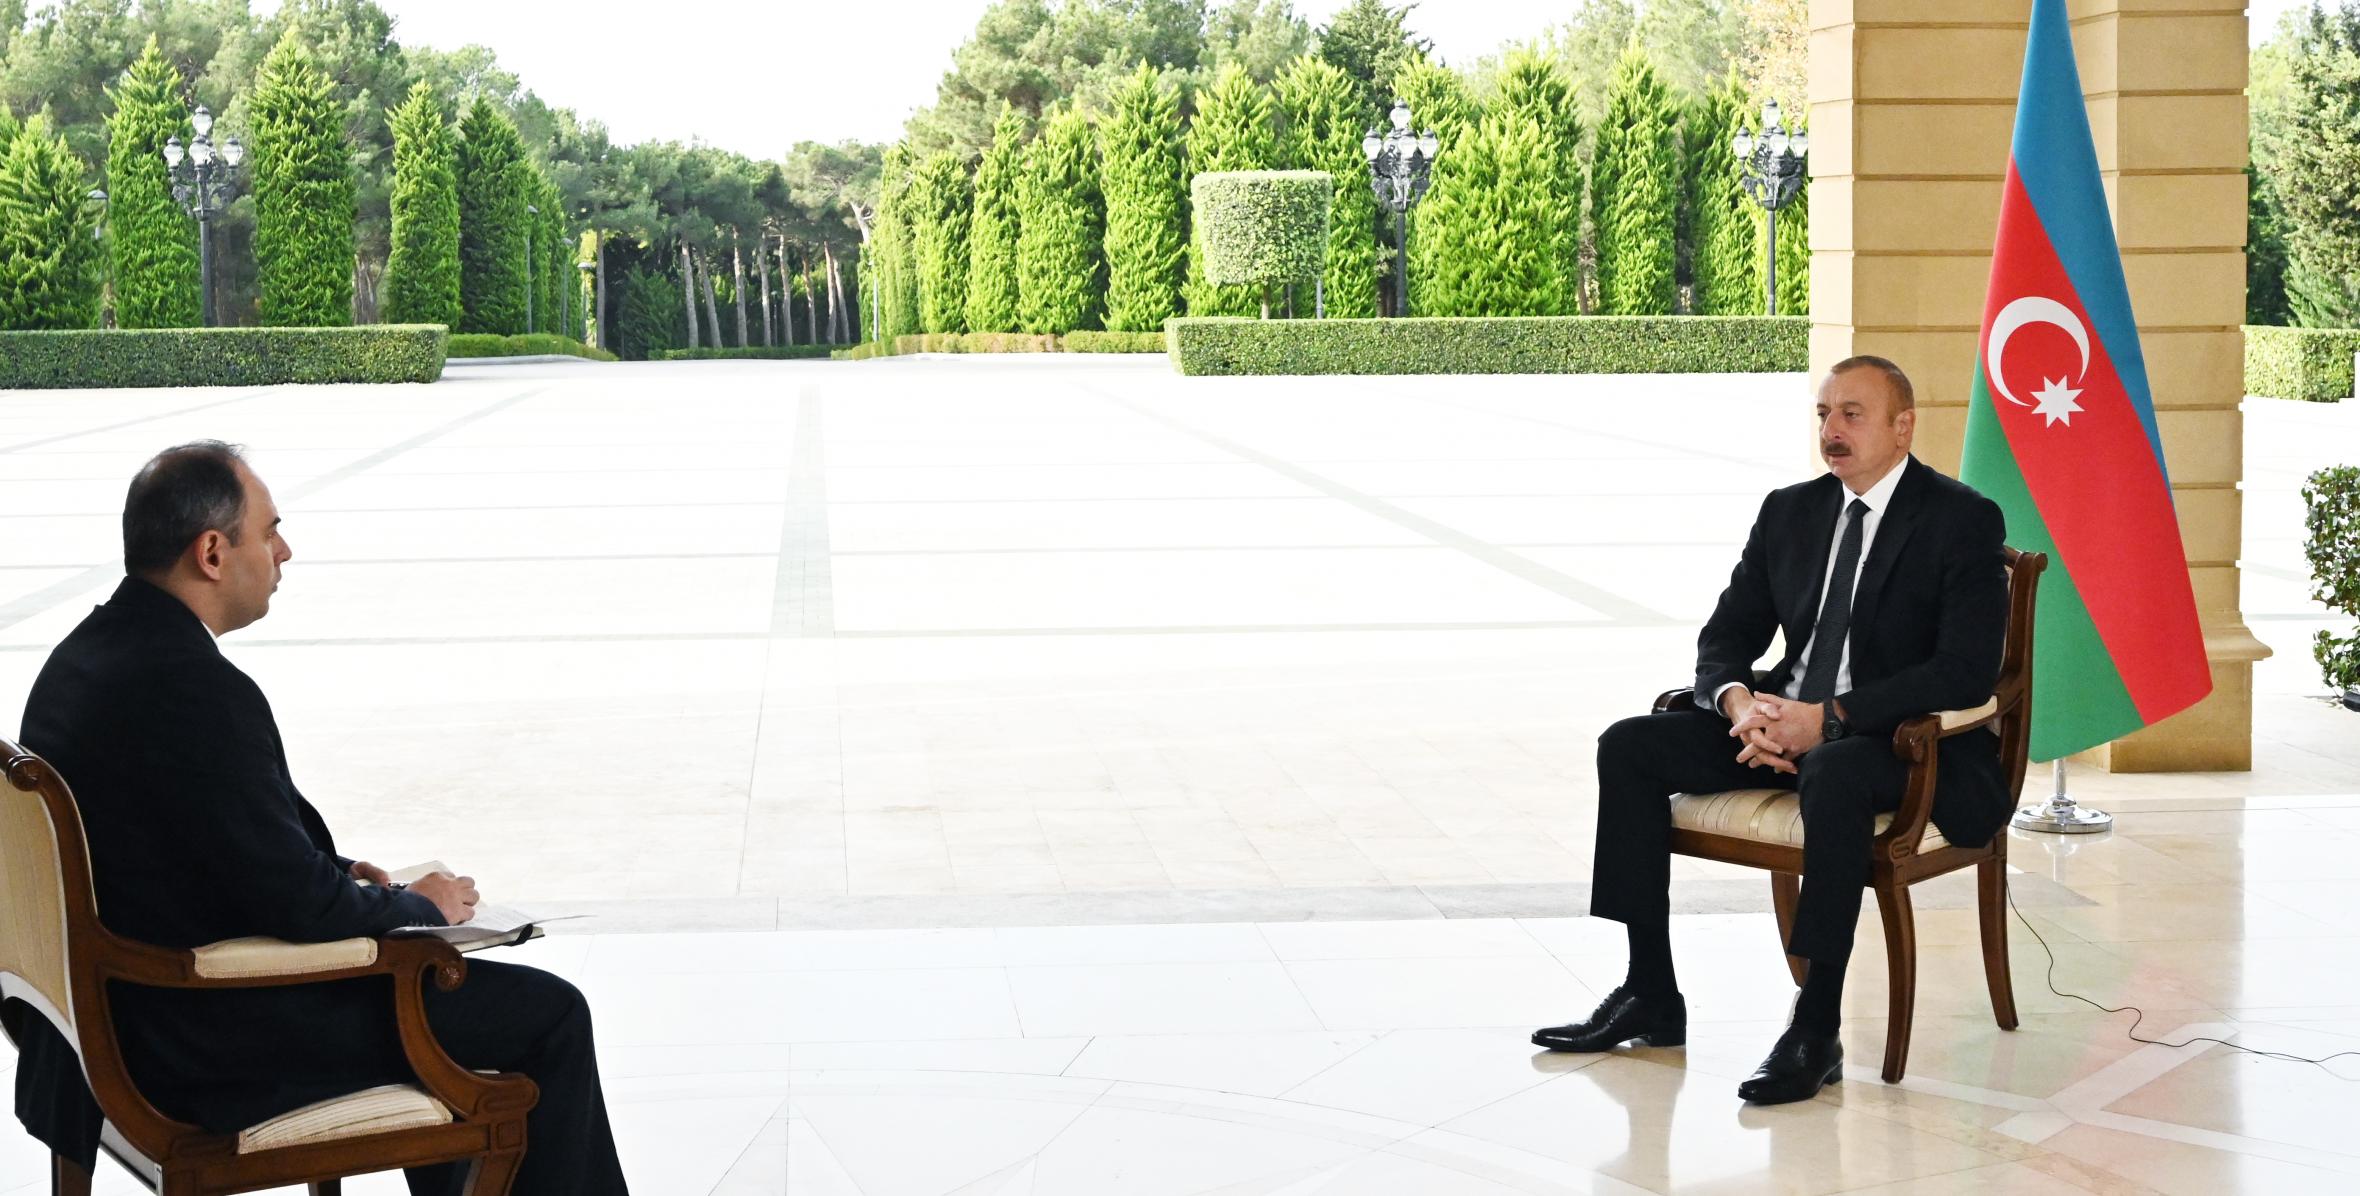 Ilham Aliyev was interviewed by Russian Interfax agency